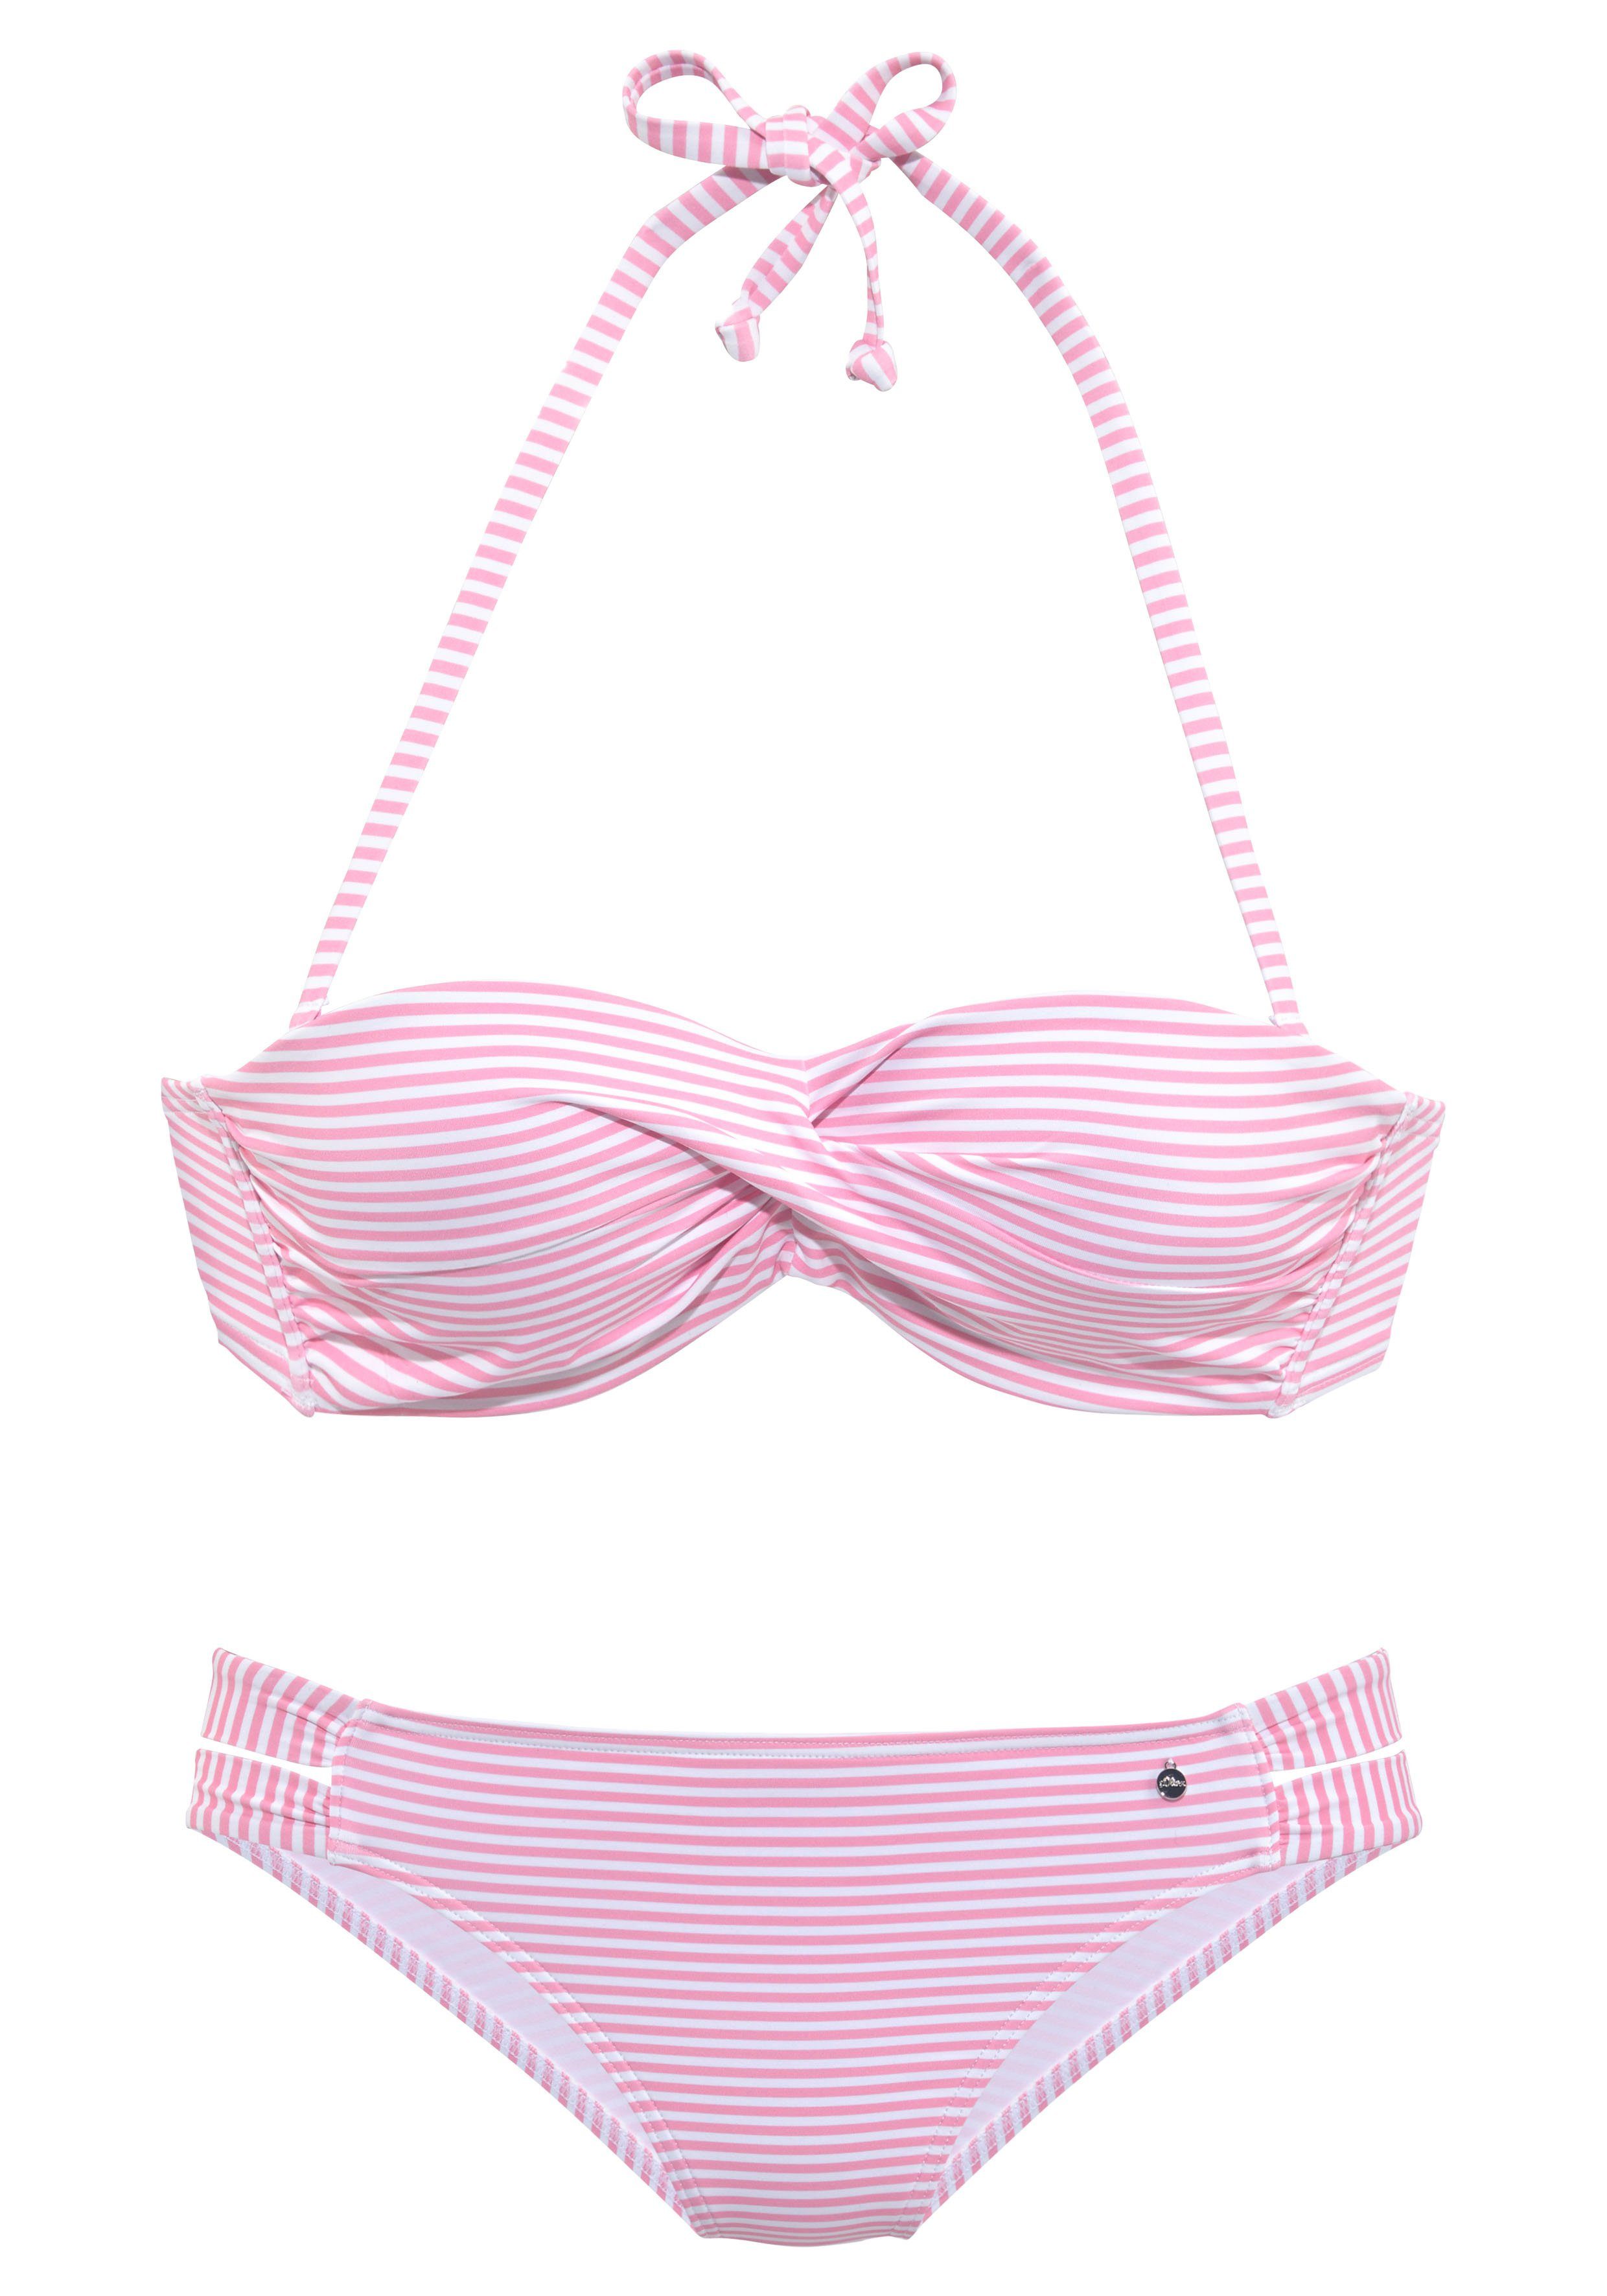 Bügel-Bandeau-Bikini s.Oliver Optik in getwisteter rosé-weiß